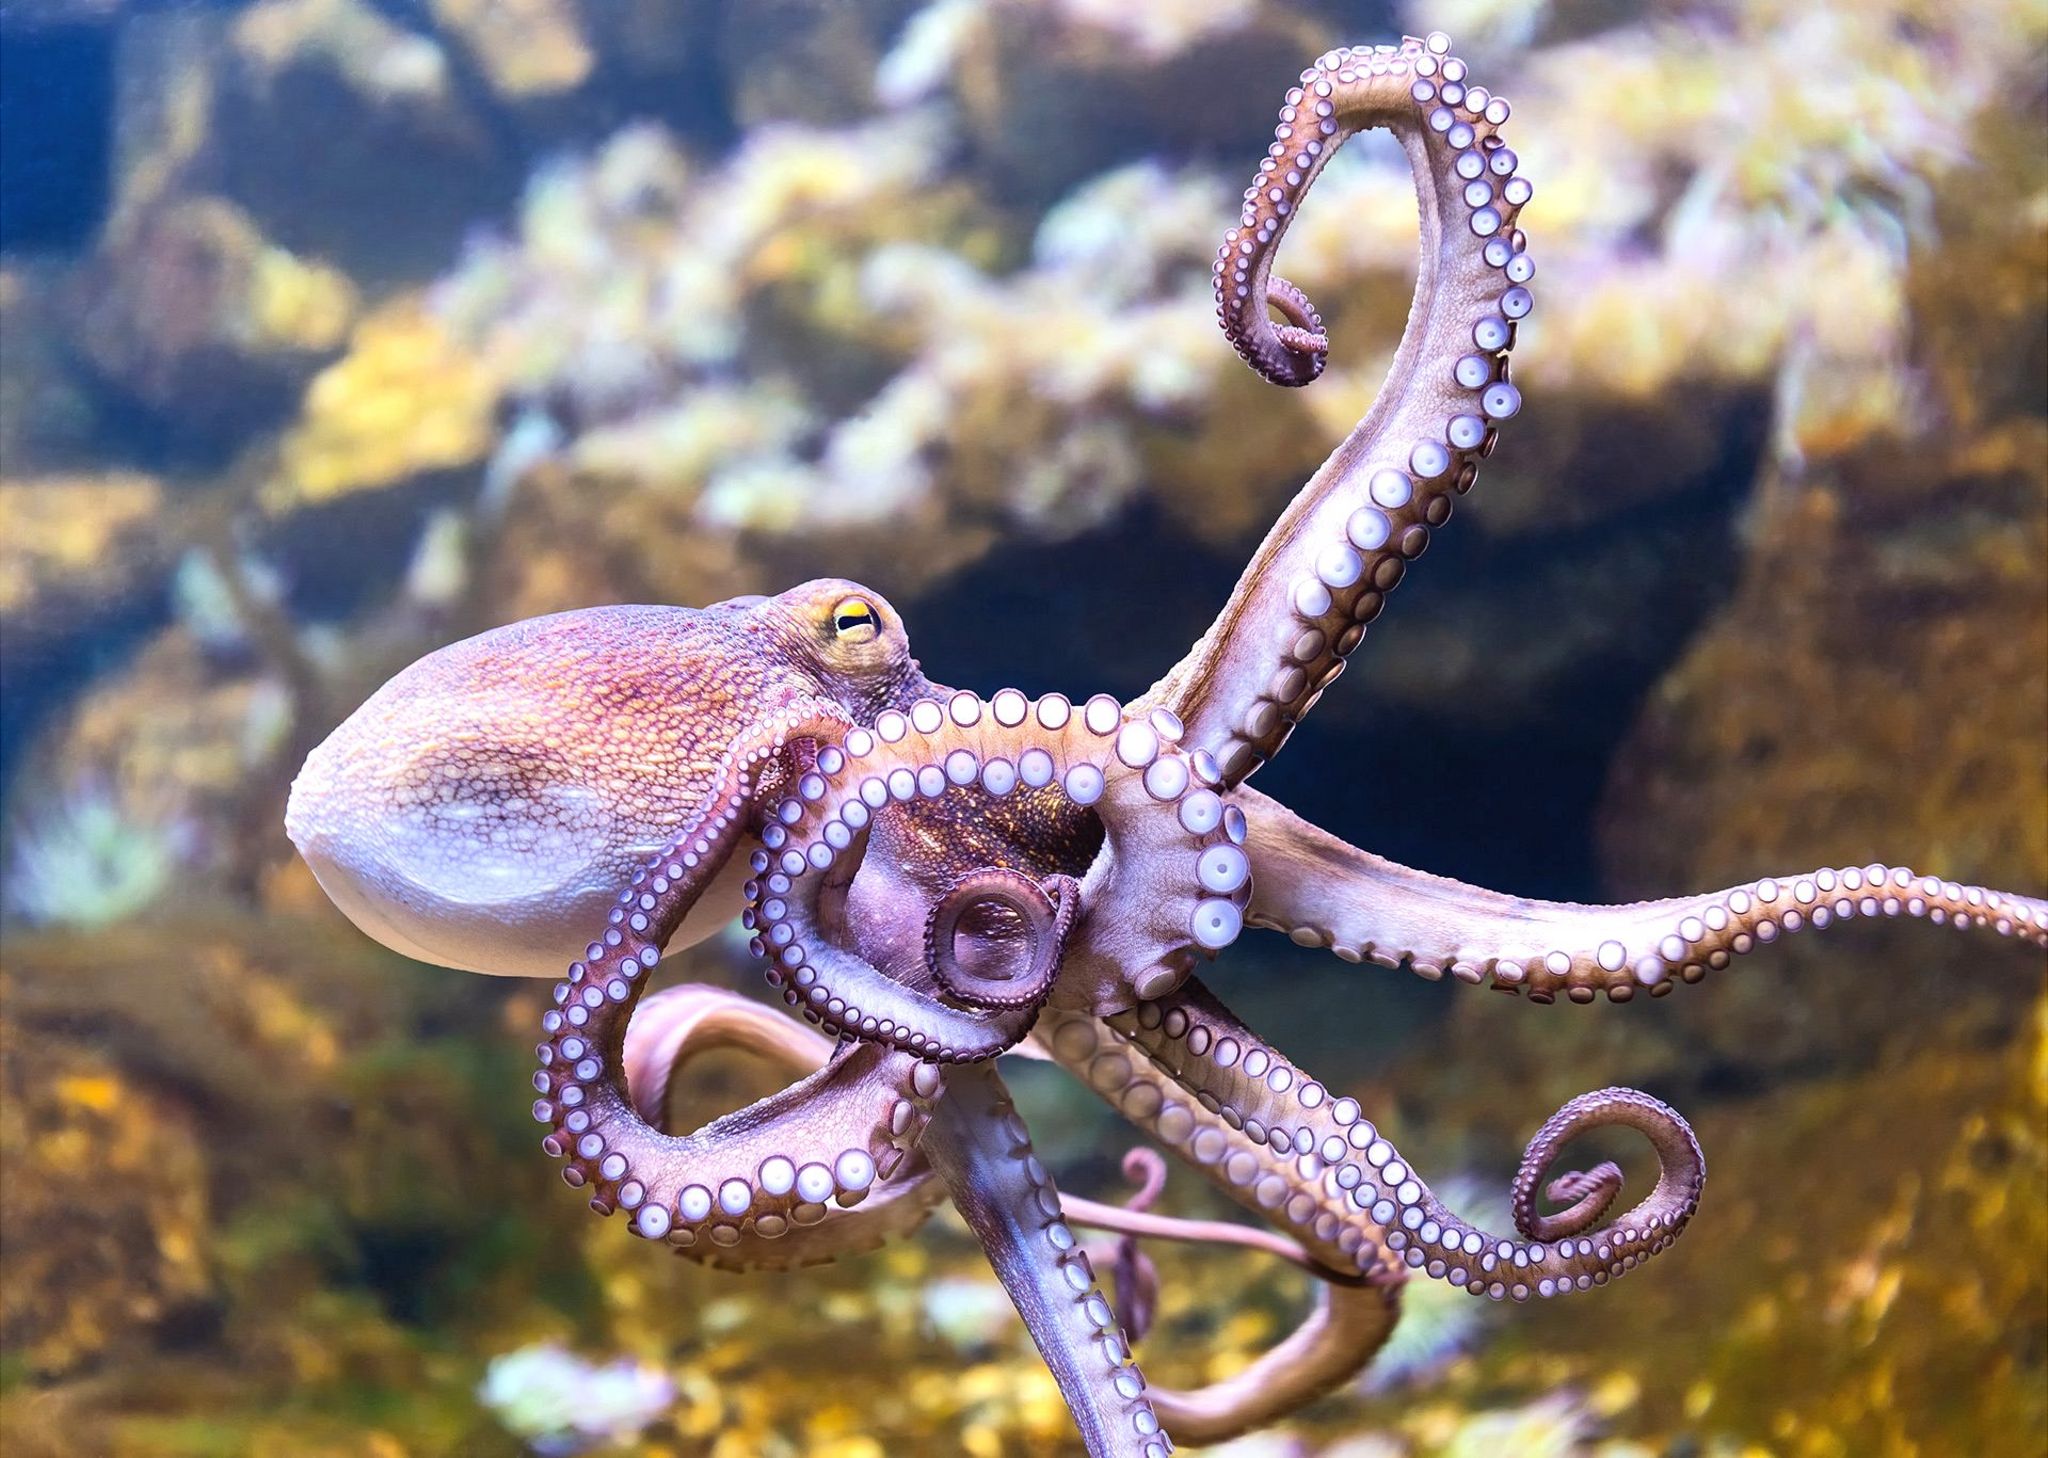 The world's first octopus farm - should it go ahead? - BBC News